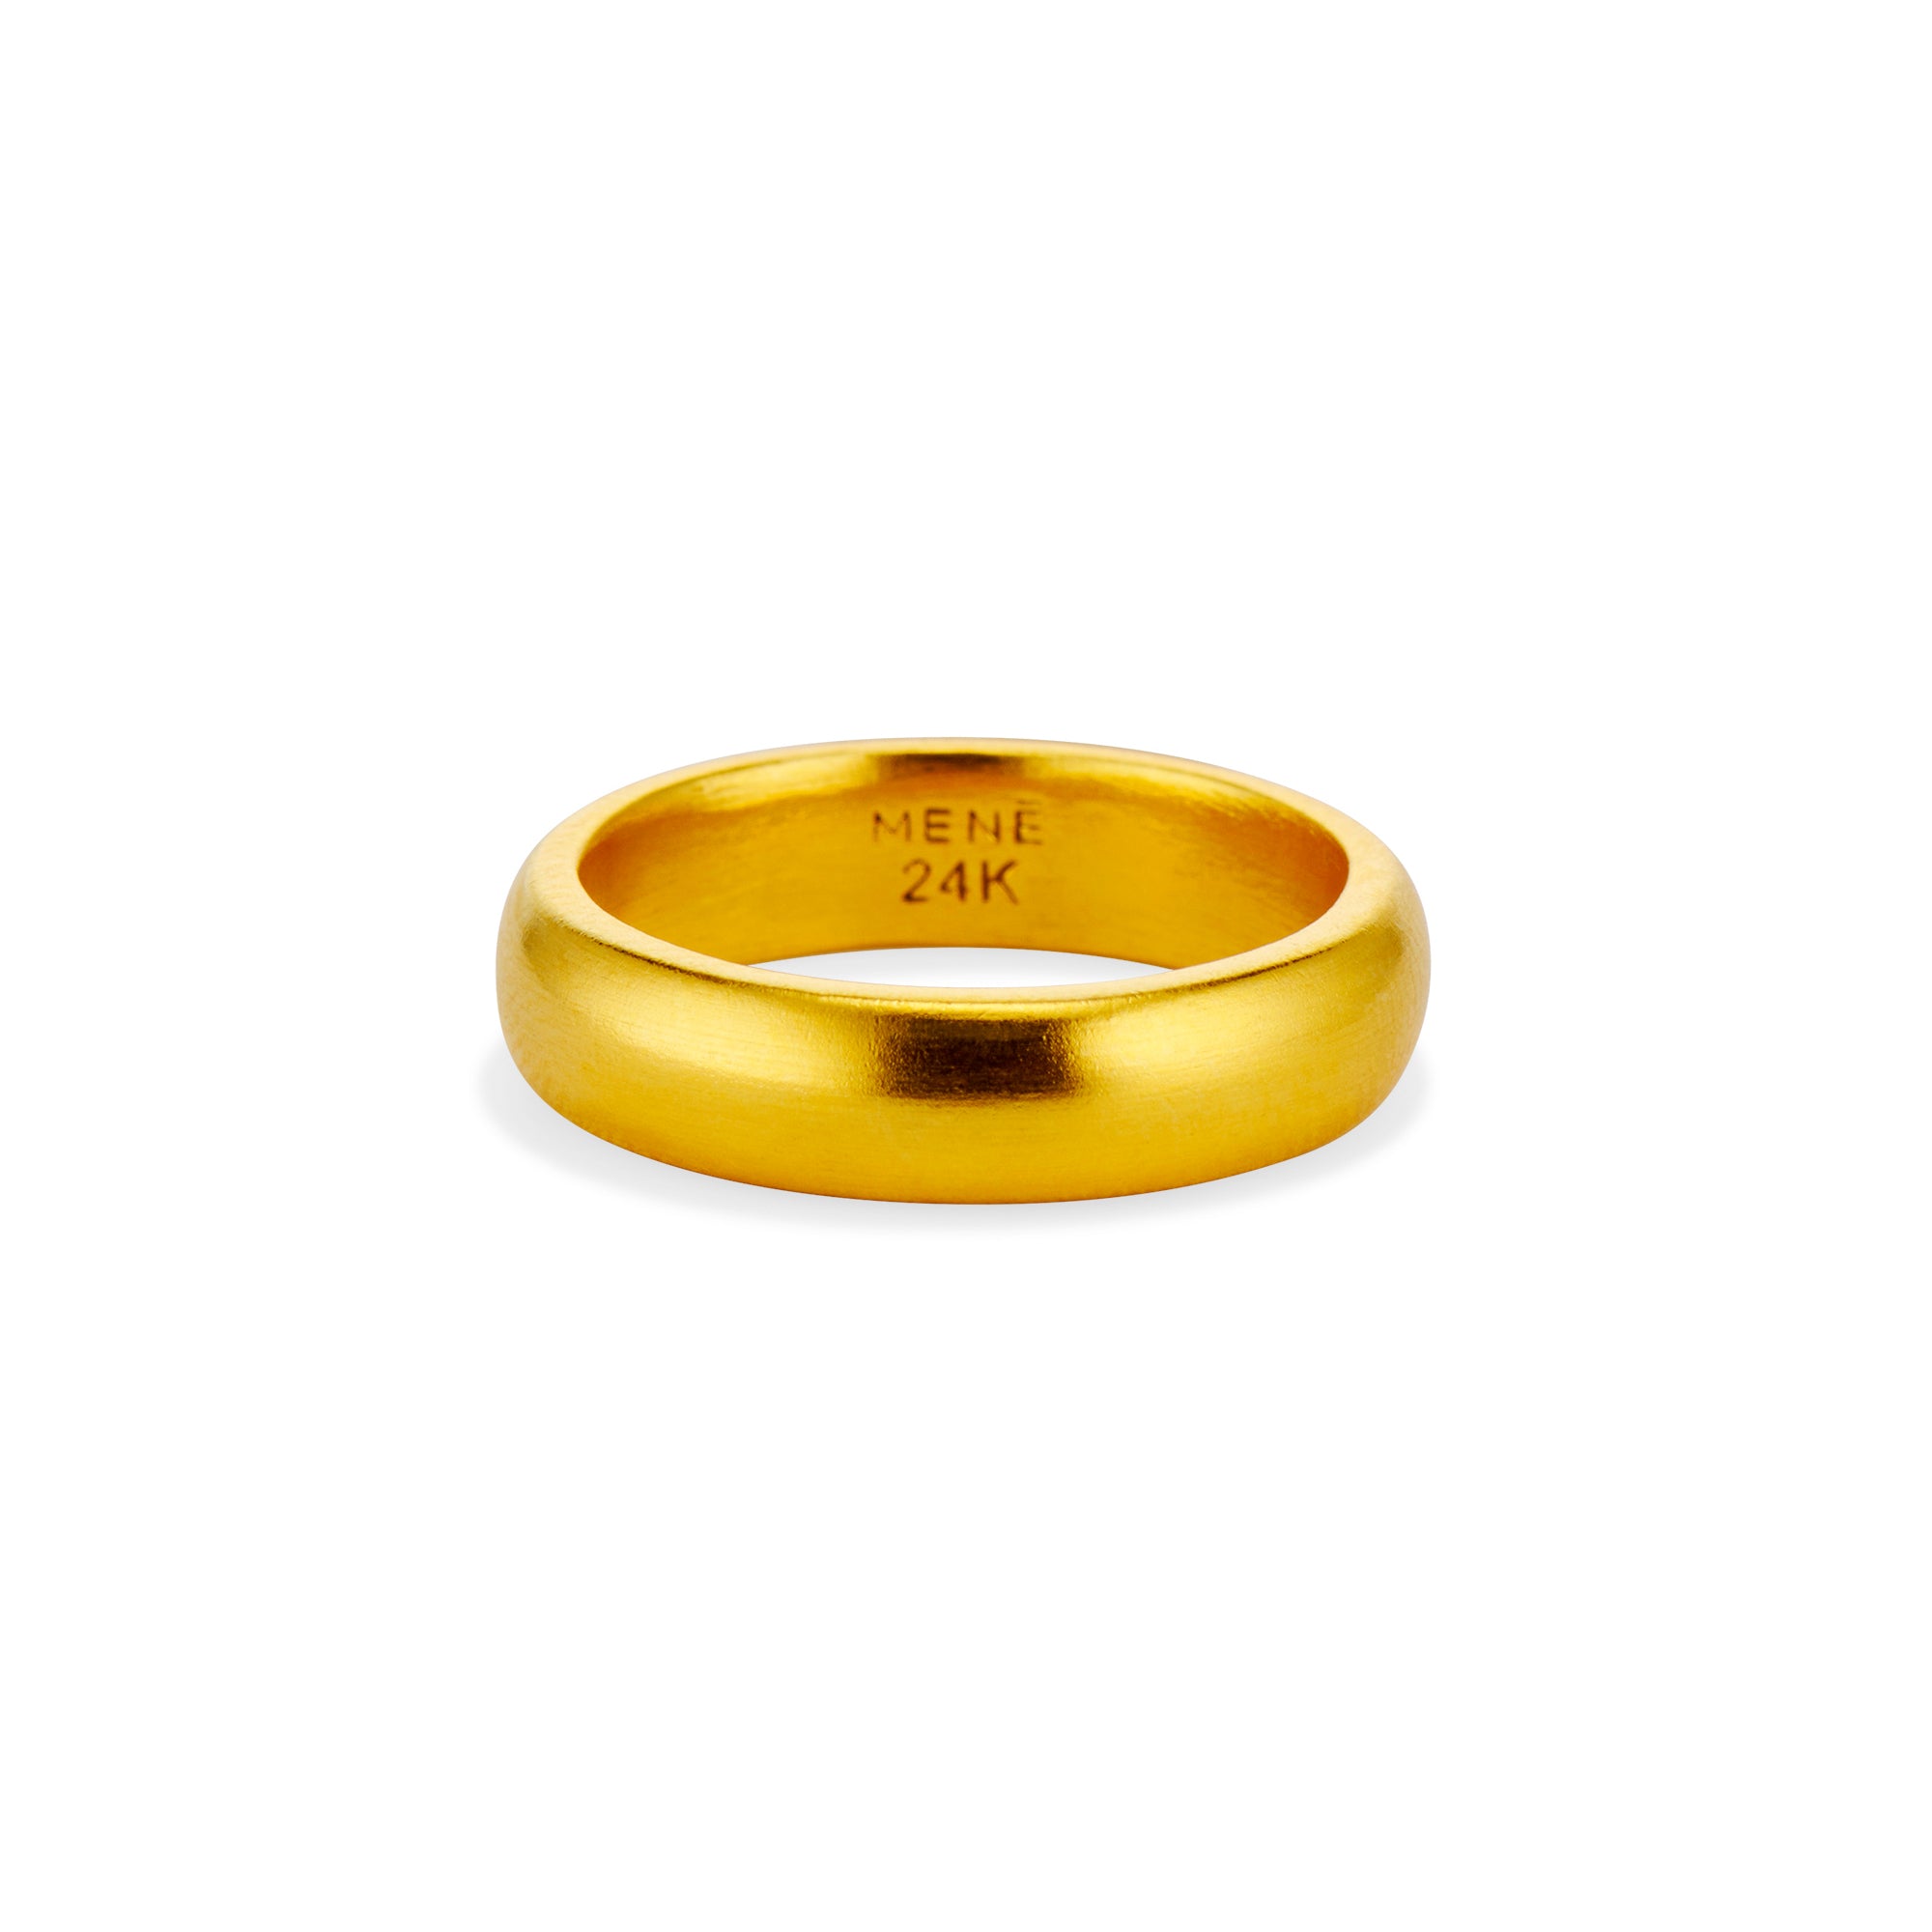 Gold ring design atm card premium skin